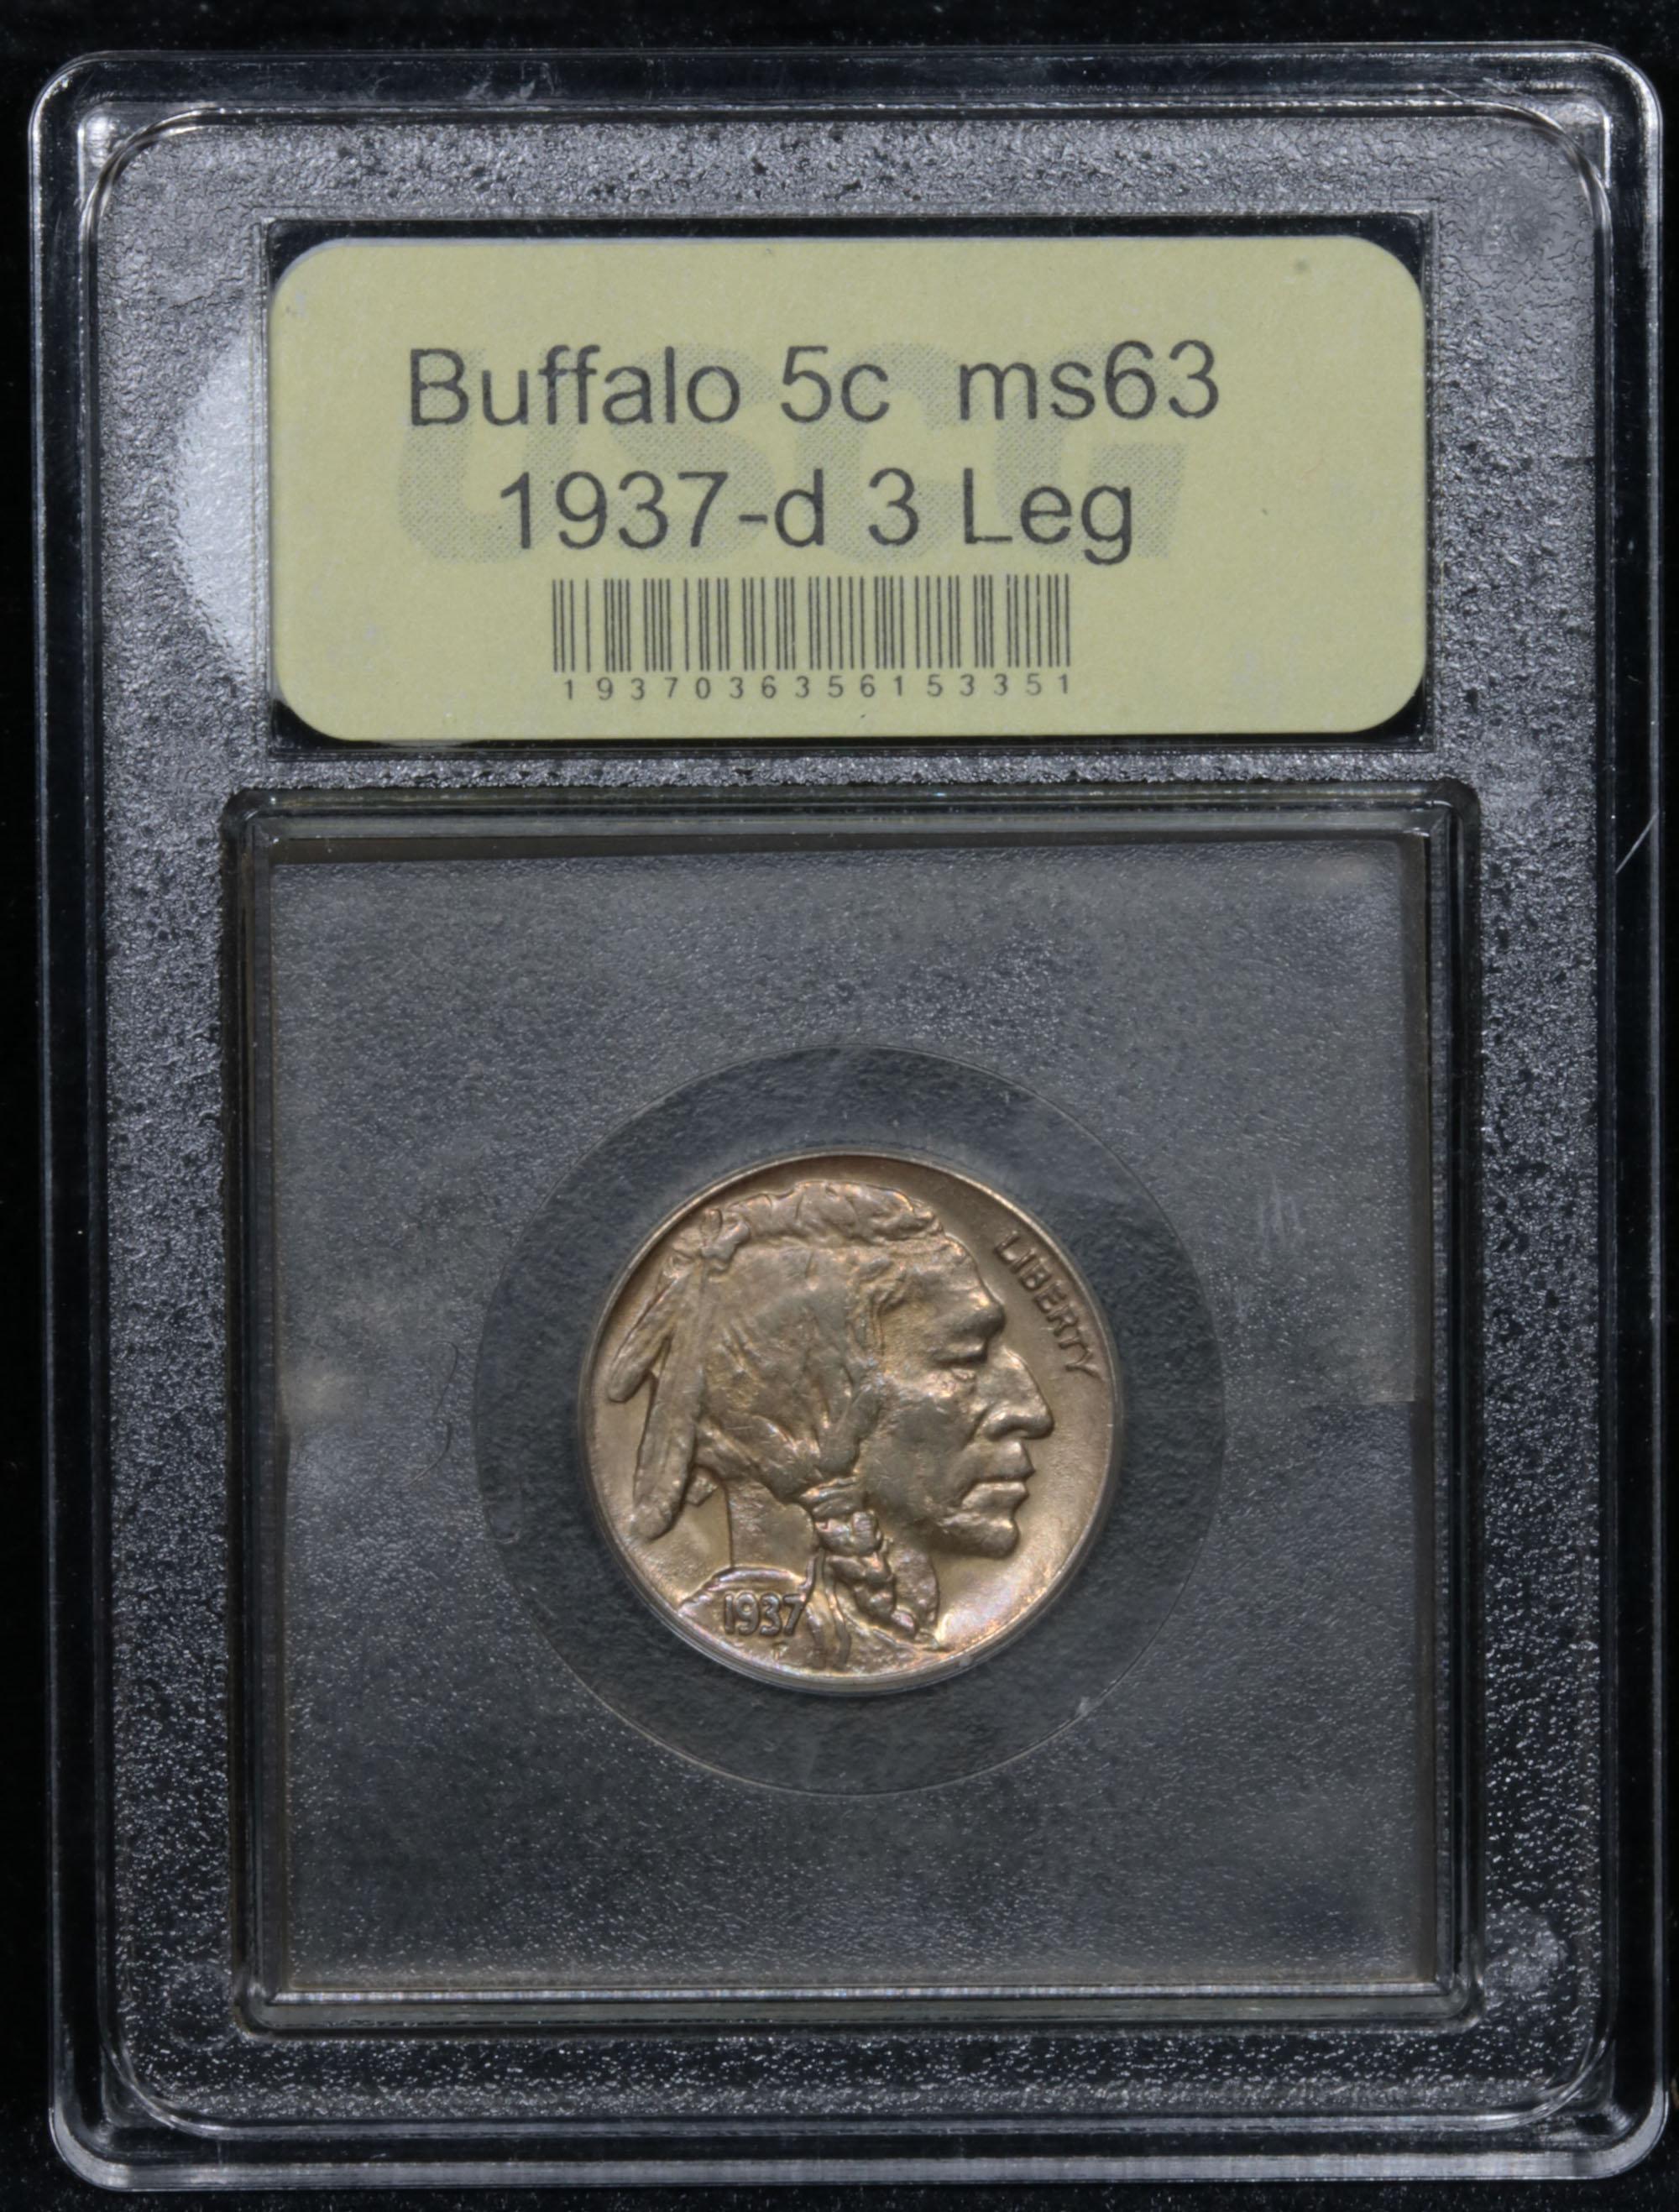 ***Auction Highlight*** 1937-d 3 Leg Buffalo Nickel 5c Graded Select Unc By USCG (fc)